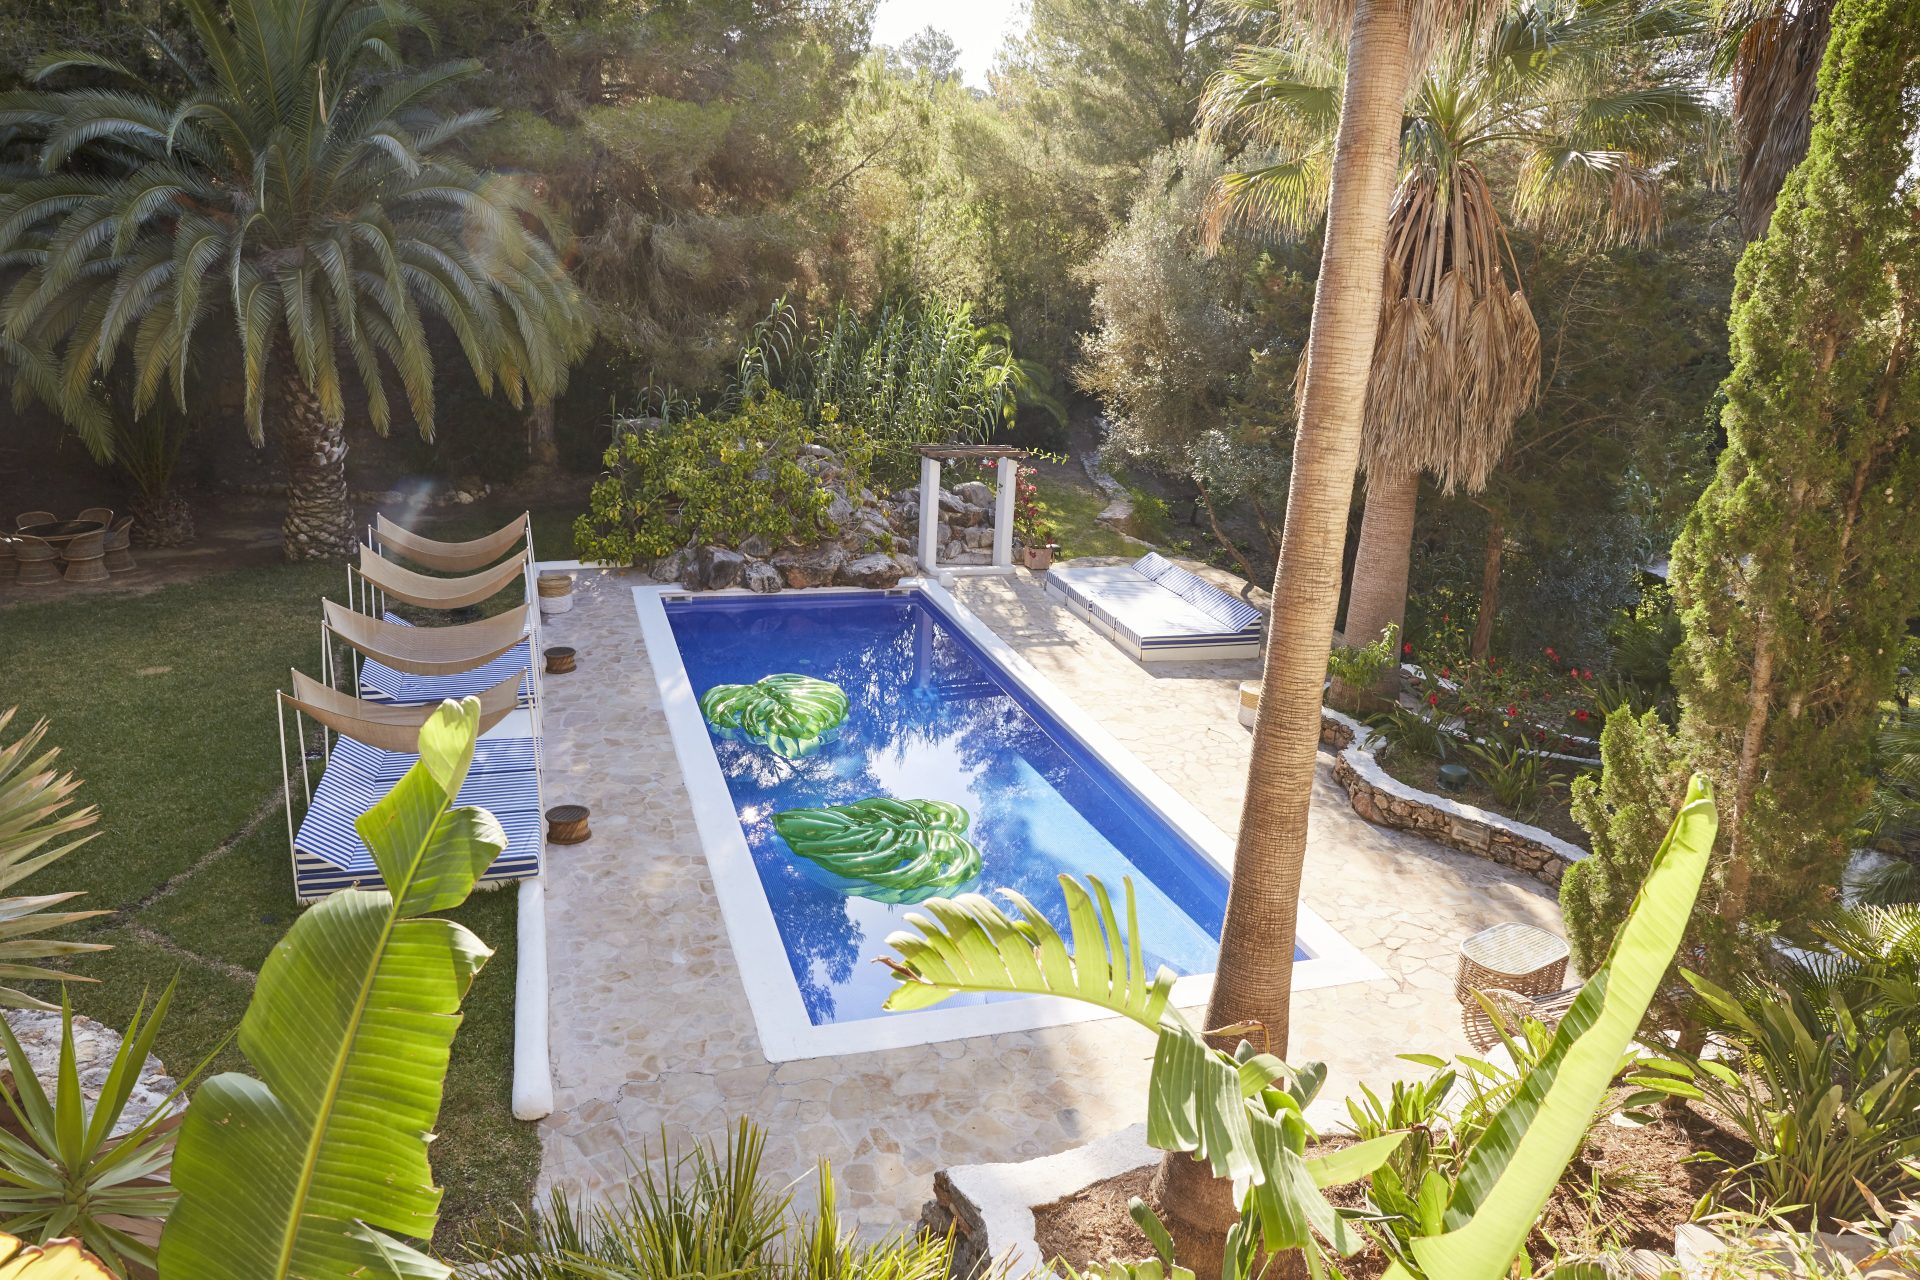 Casa Mimosa 5 x droomvilla’s op Ibiza: Hier slapen de sterren